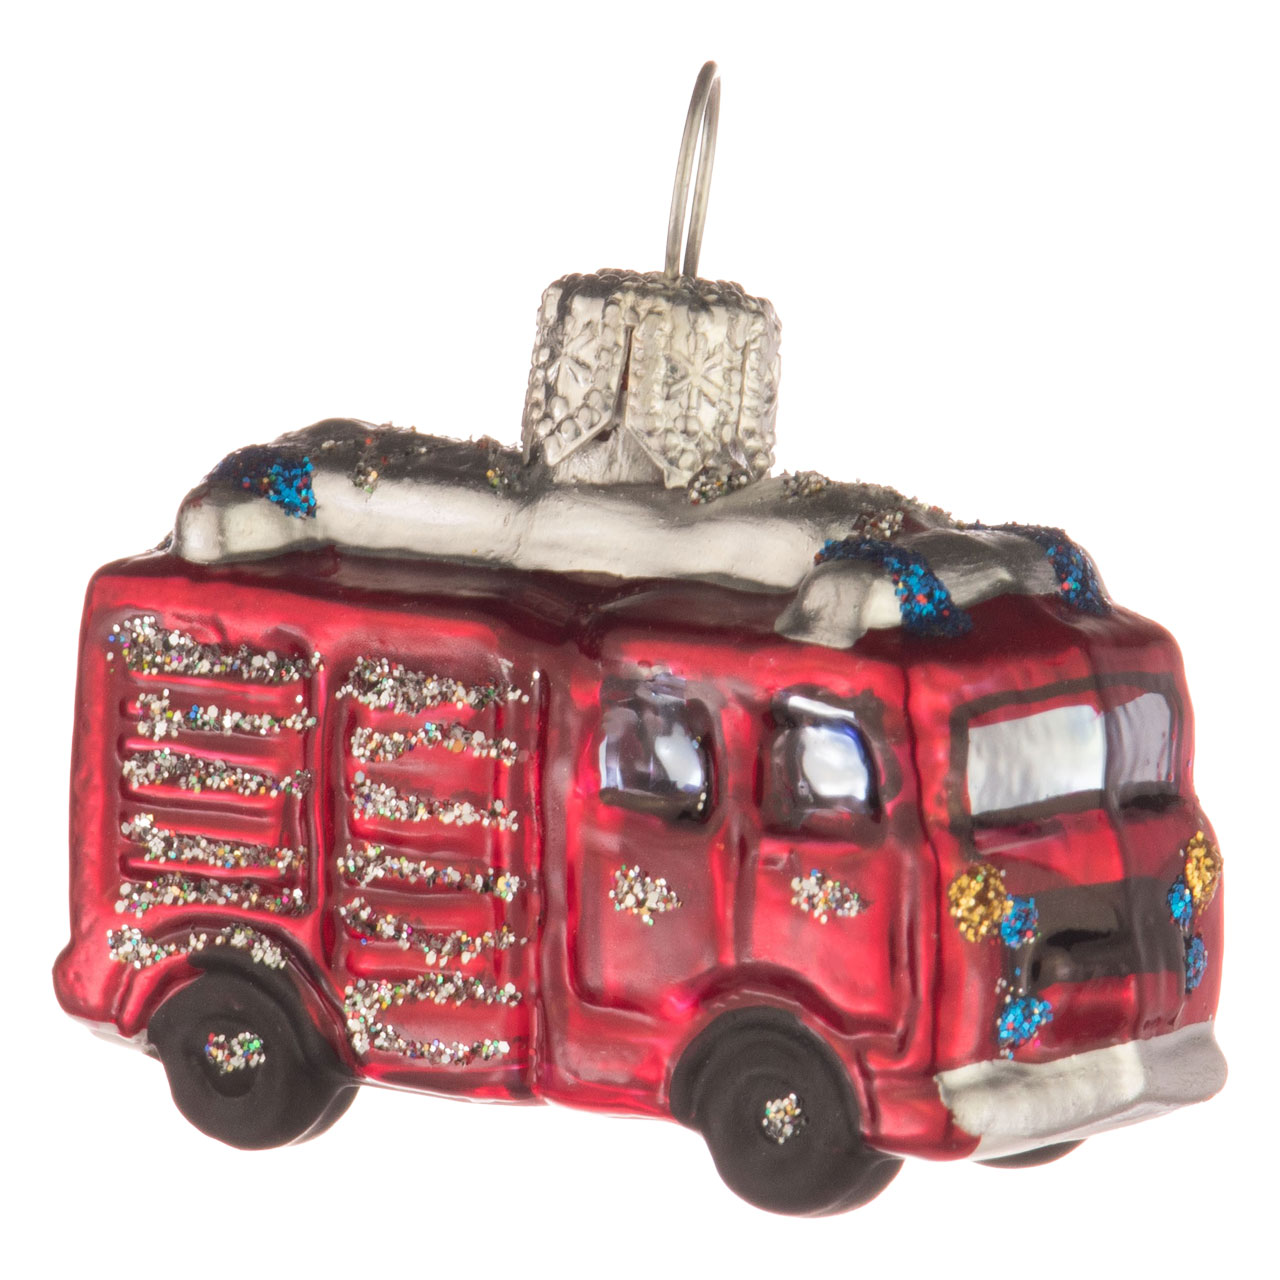 Fire engine, mini